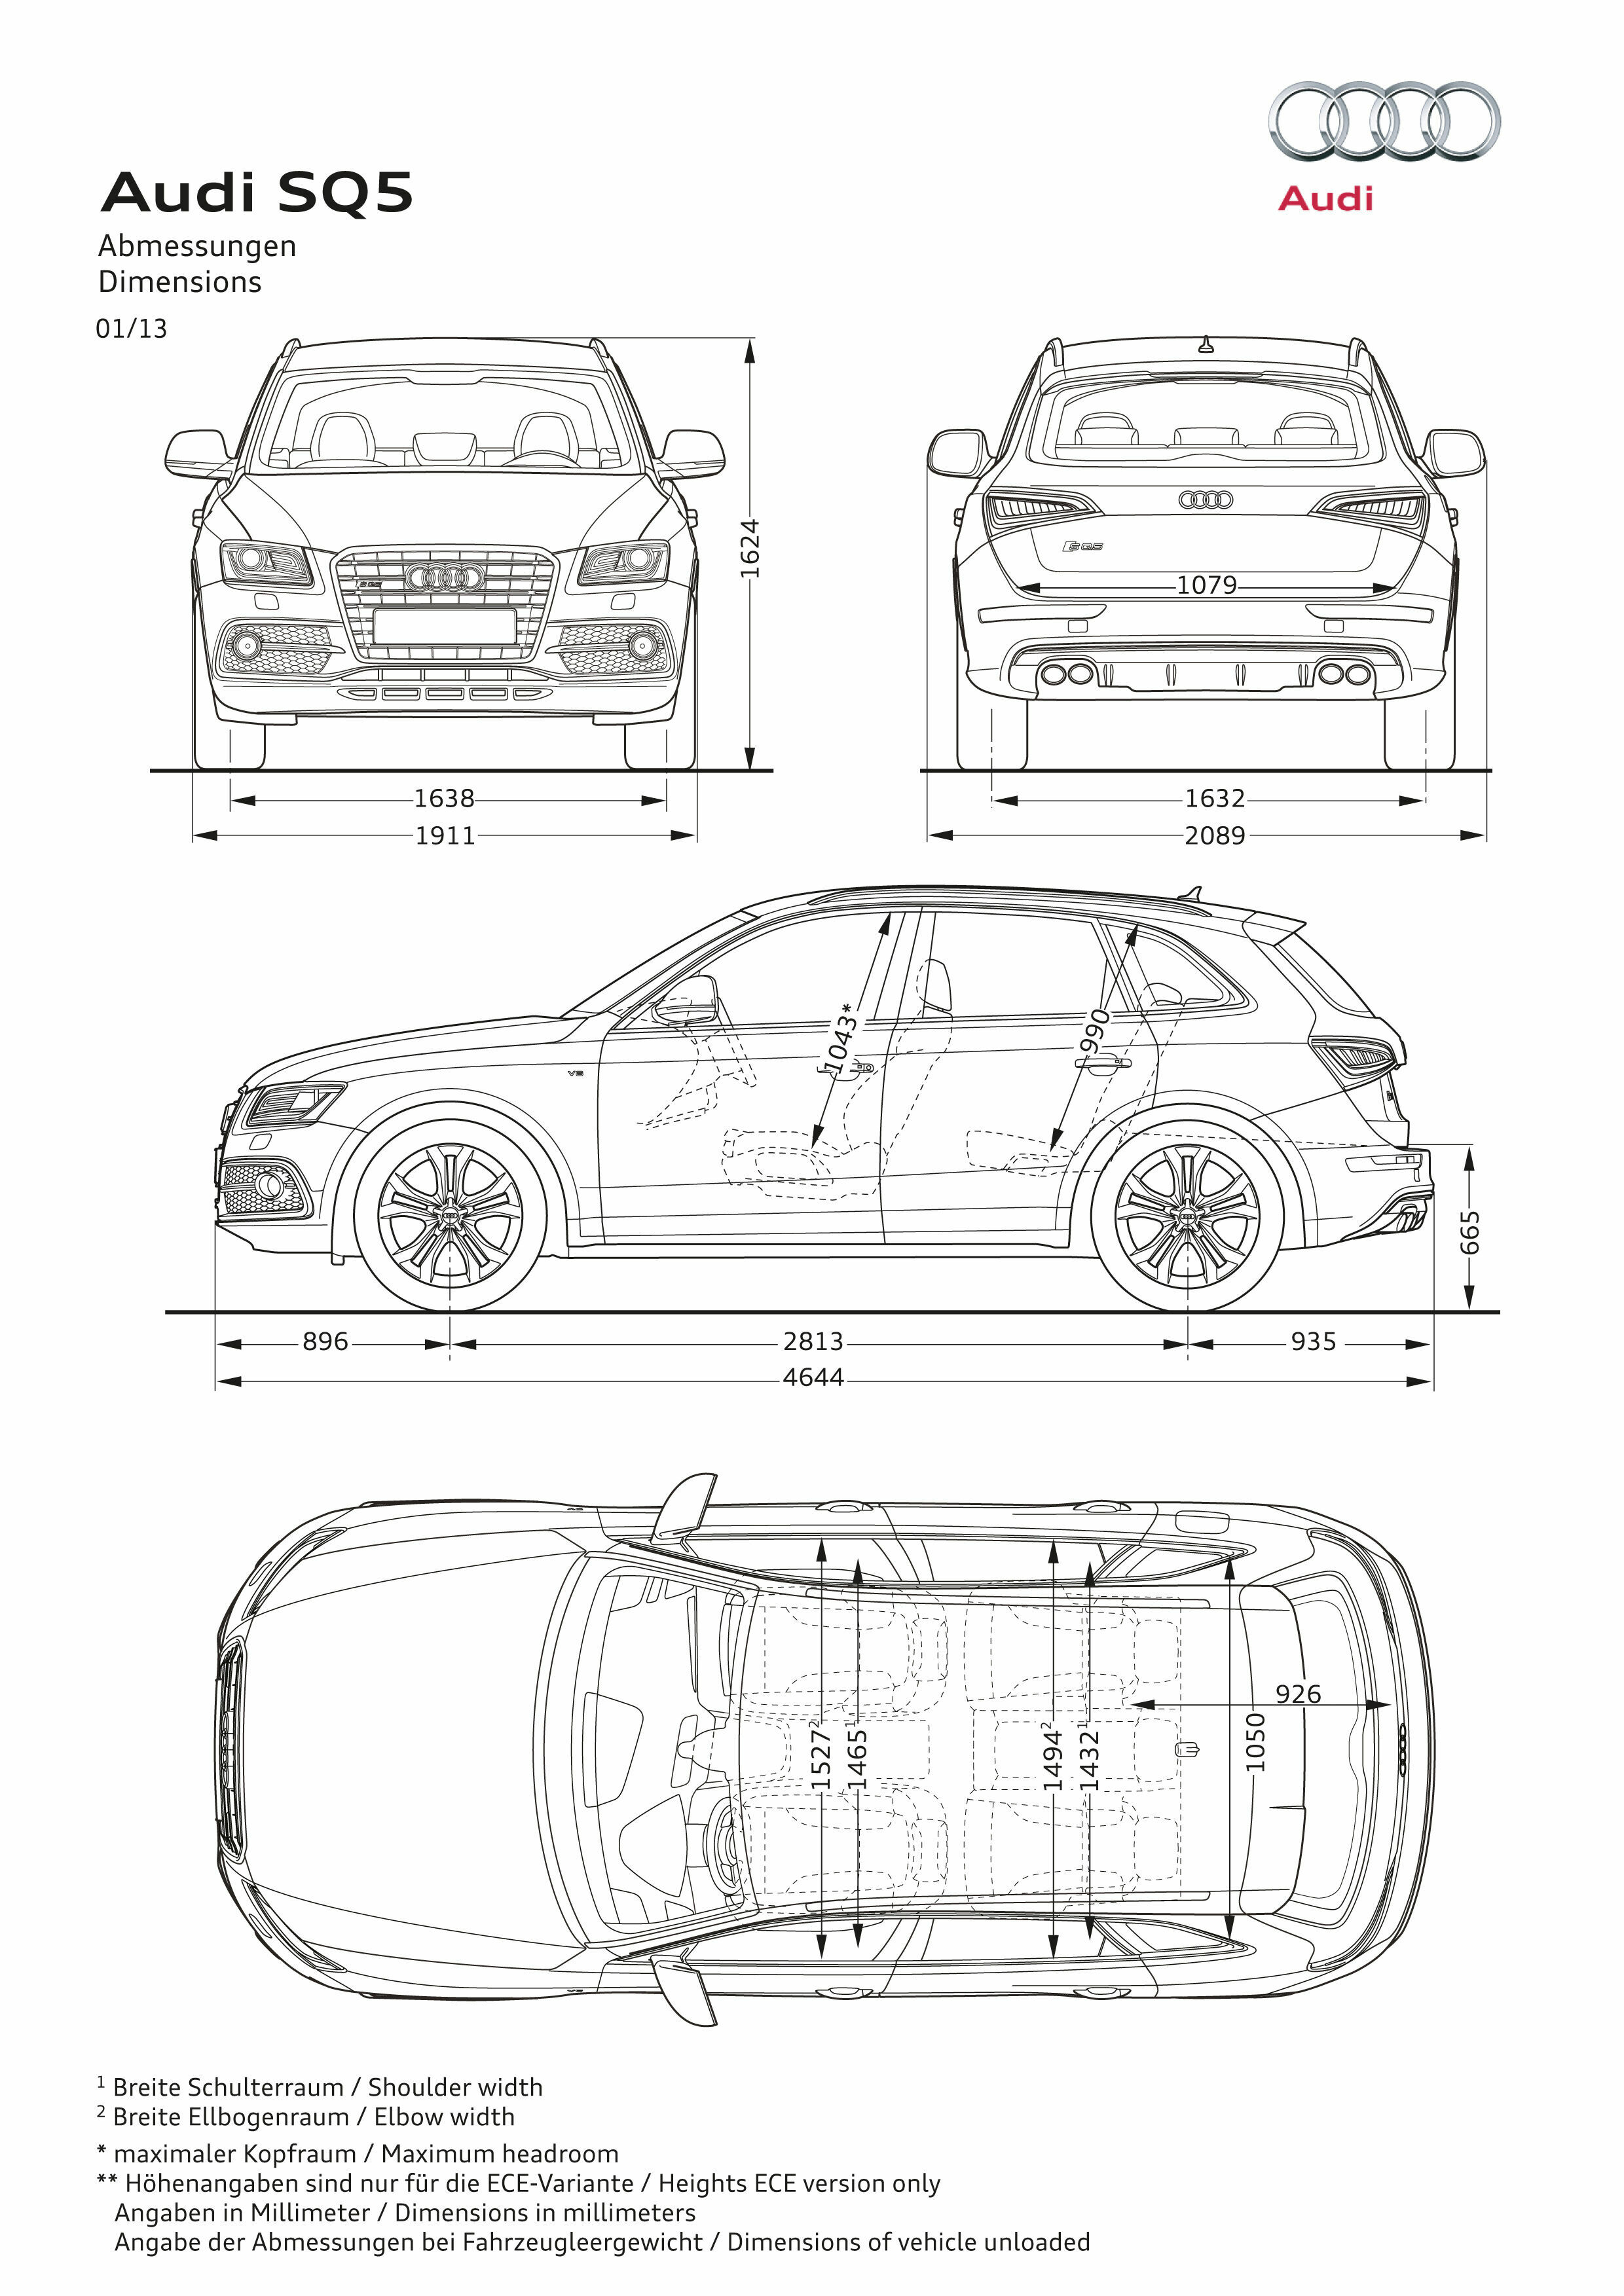 Audi SQ5 (3.0 TFSI USA model)